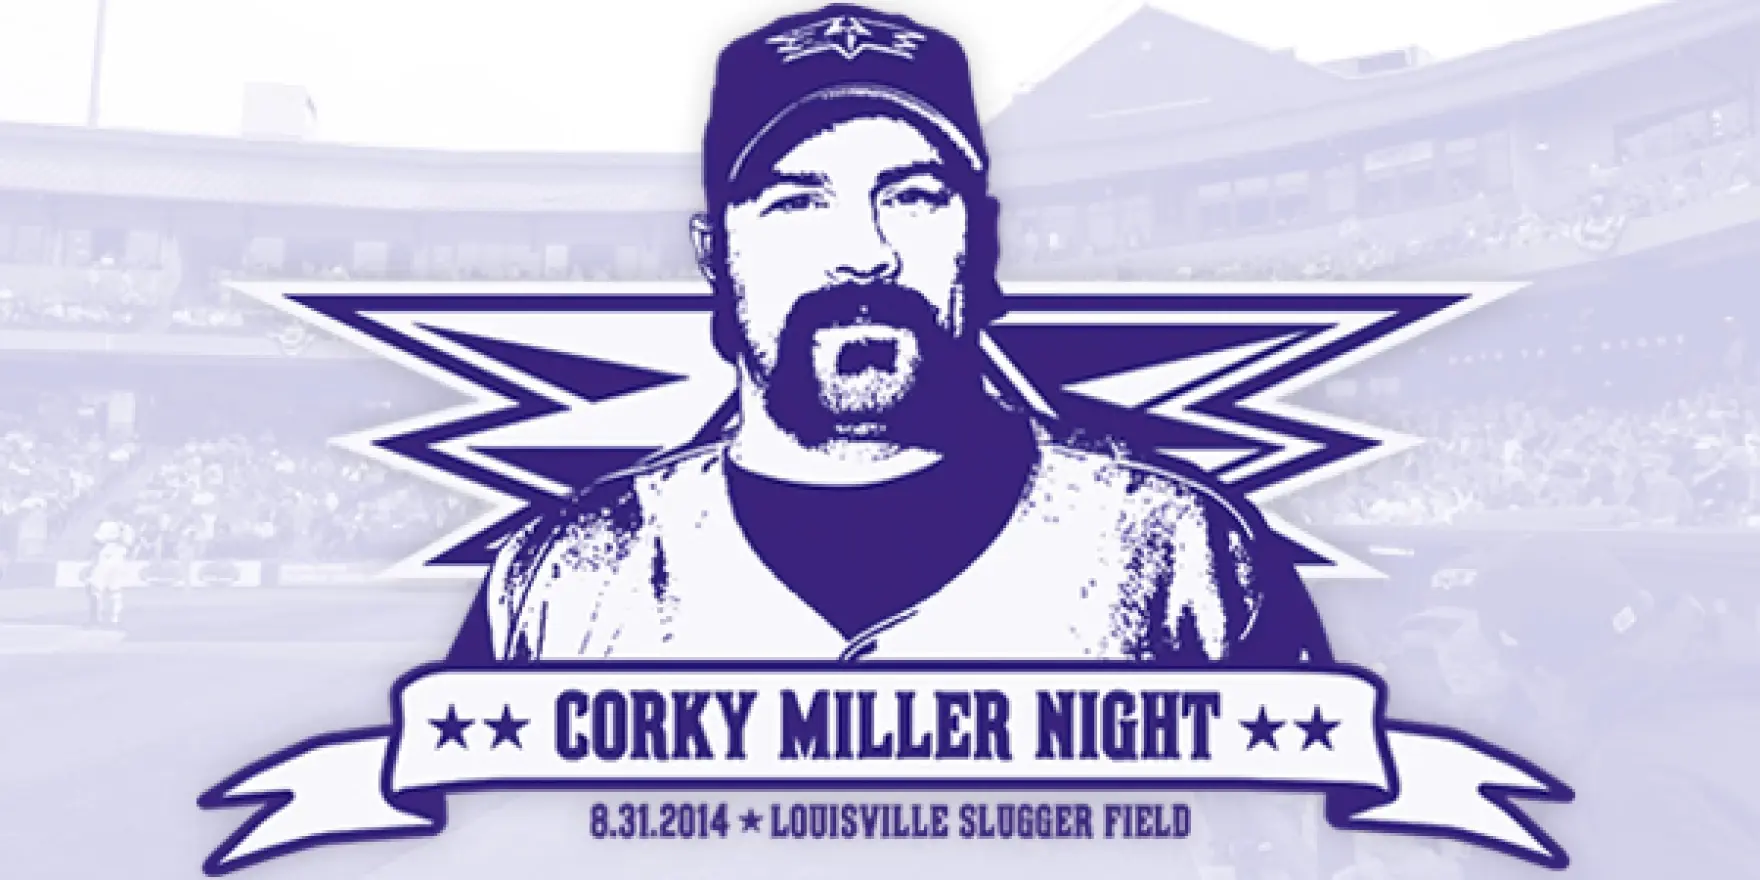 Corky Miller Night in Louisville